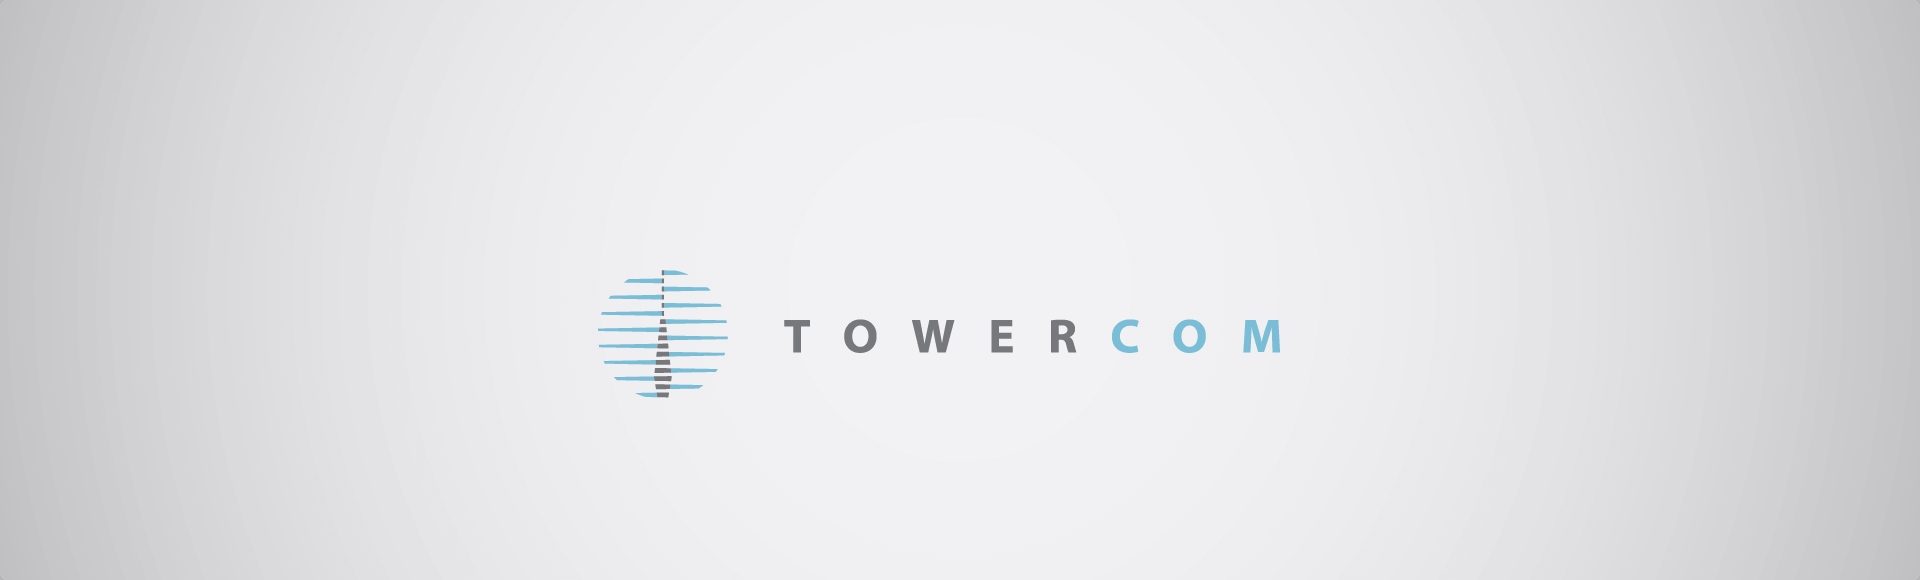 Towercom